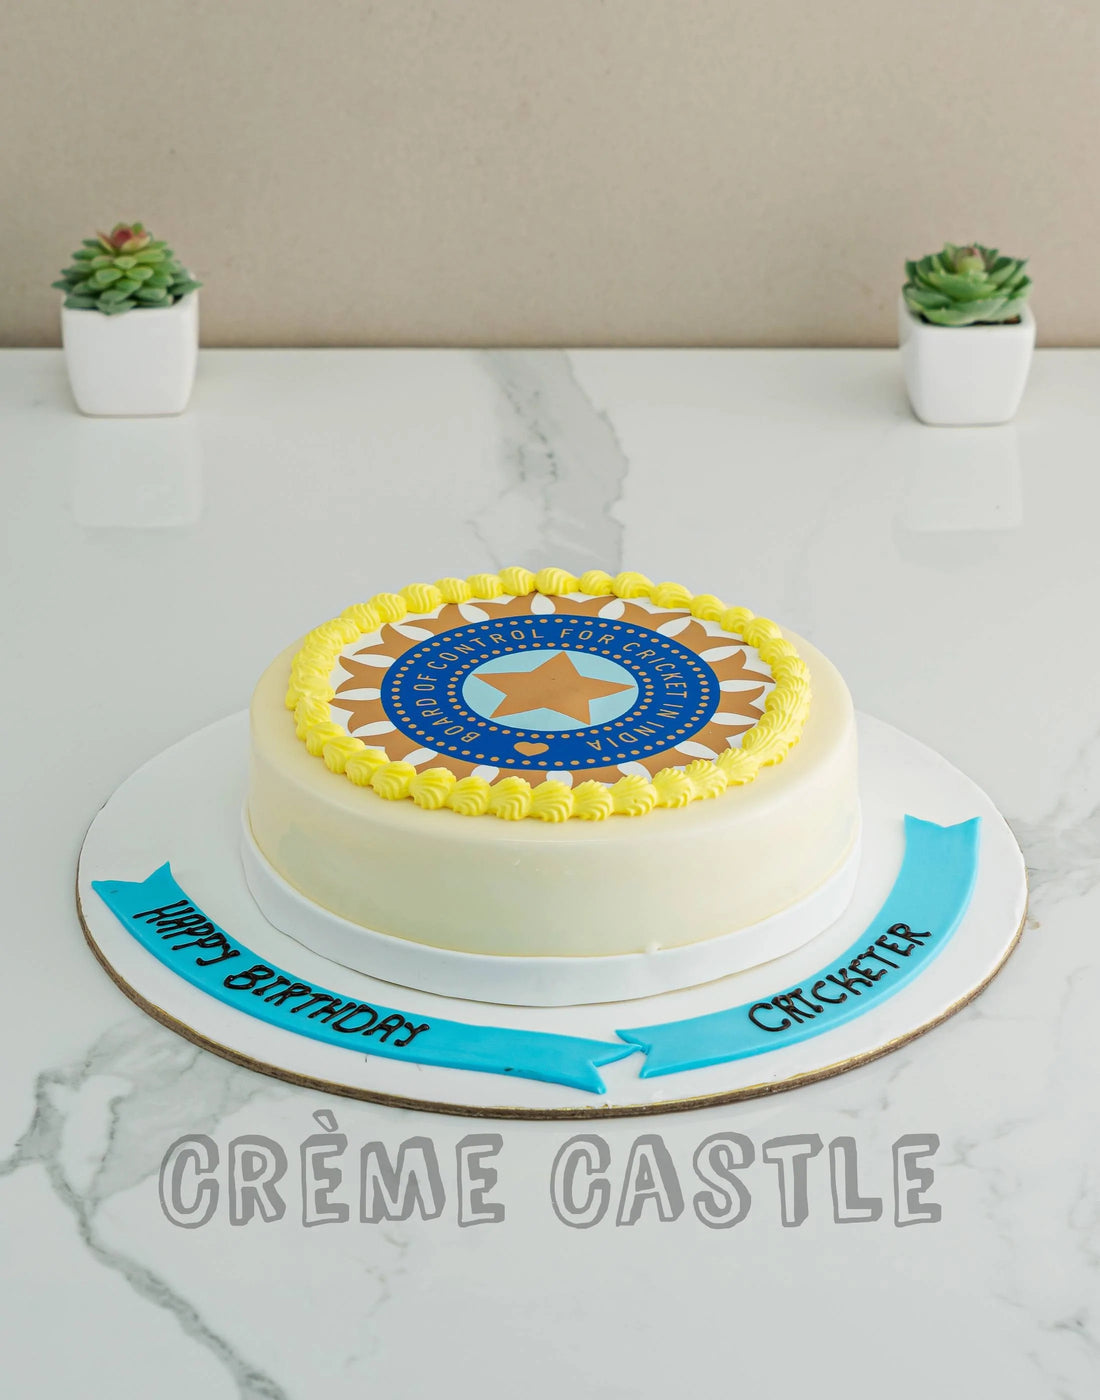 BCCI Cricket Cake